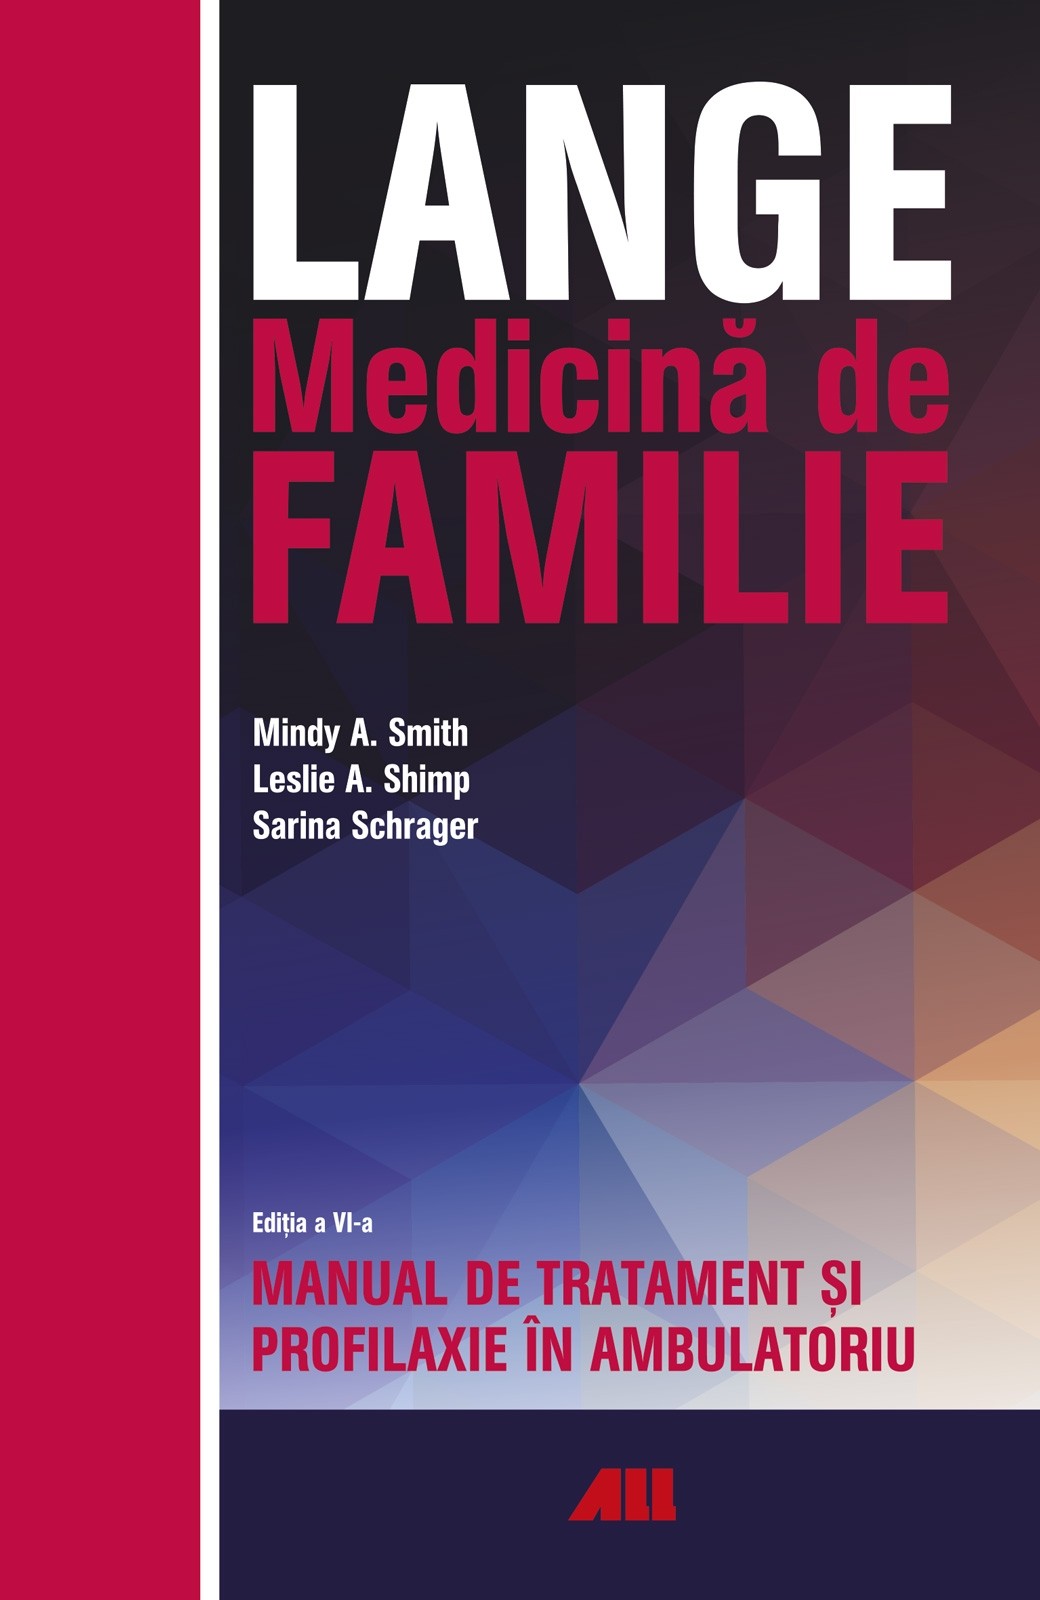 LANGE. Medicina de familie | Leslie A. Shimp, Mindy A. Smith, Sarina Schrager ALL